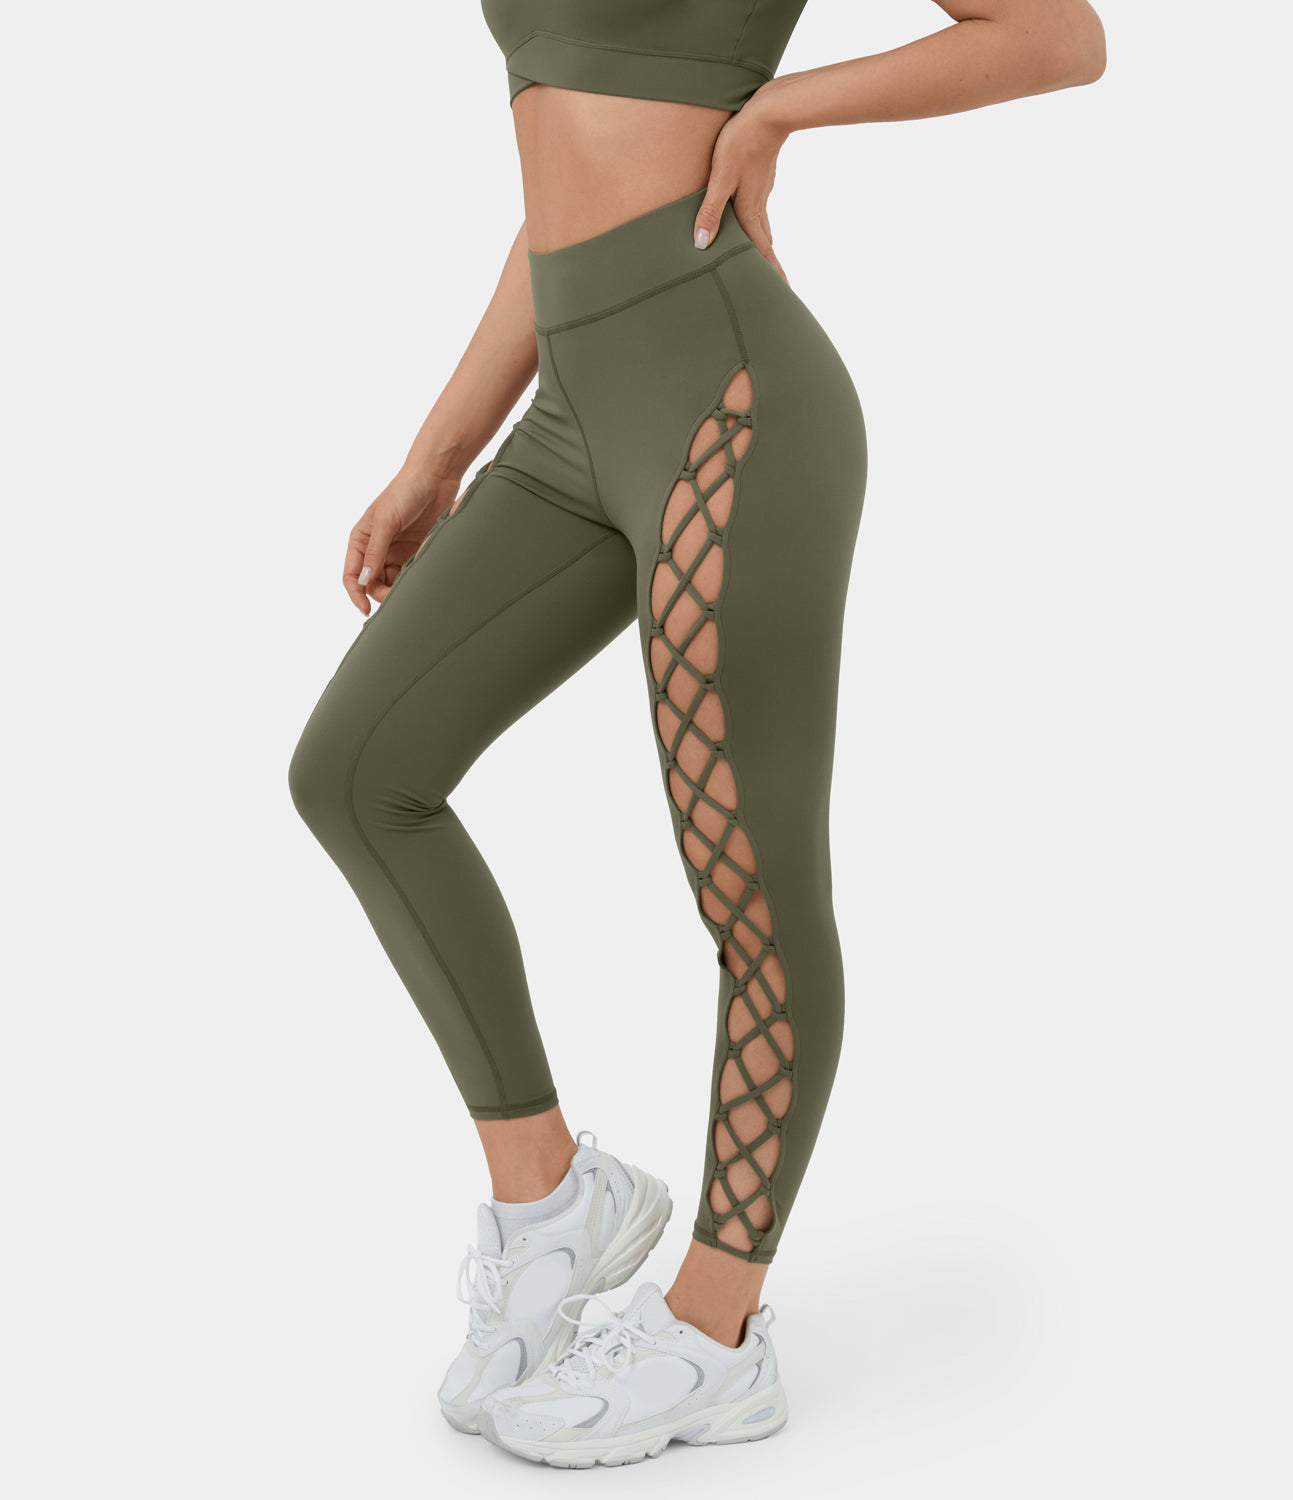 

Halara Cloudfulв„ў High Waisted Crisscross Cut Out Yoga 7/8 Leggings - Black -  gym leggings leggings with pockets leggings with butt lift